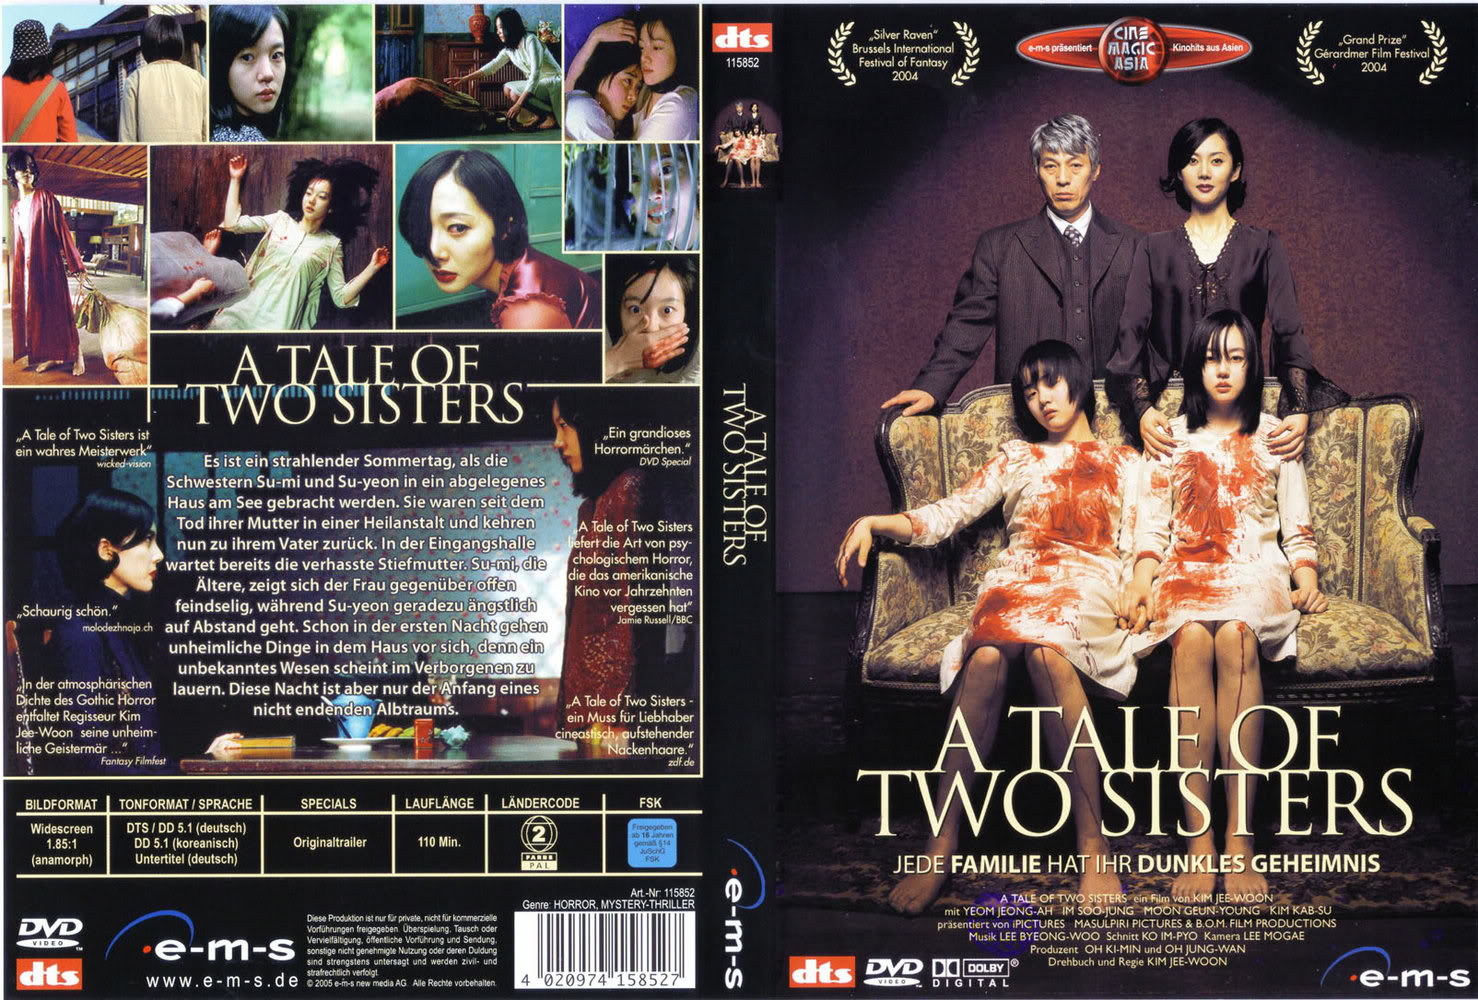 Tale of two sisters Постер. "A Tale of two sisters" (South Korea, 2003). Chantelise – a Tale of two sisters. Twin Quest -the Tale of two sisters-. Sister tale